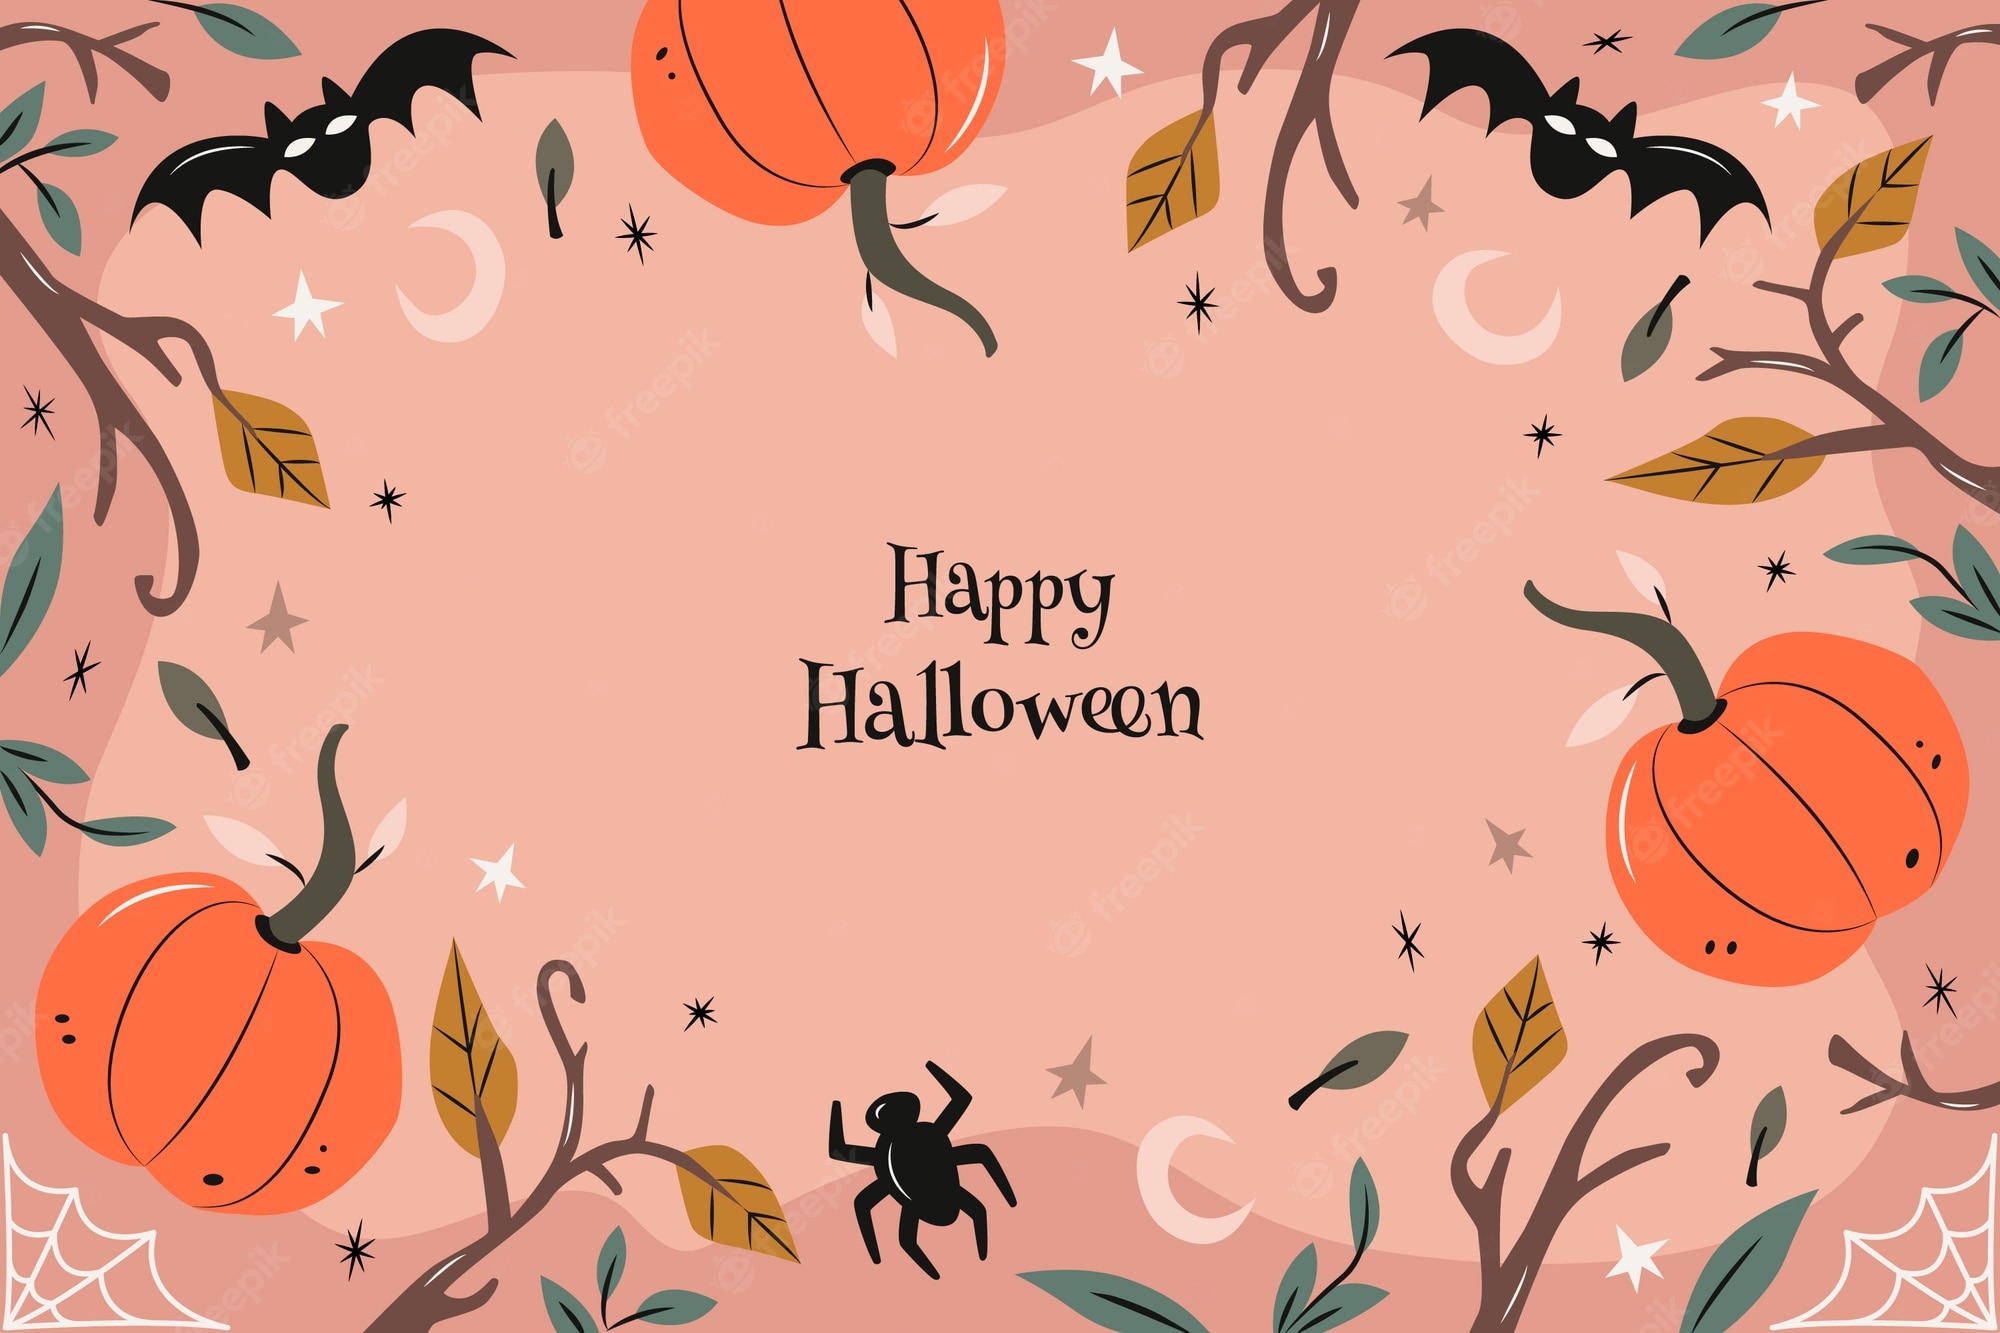 Wallpaper halloween background Image. Free Vectors, & PSD